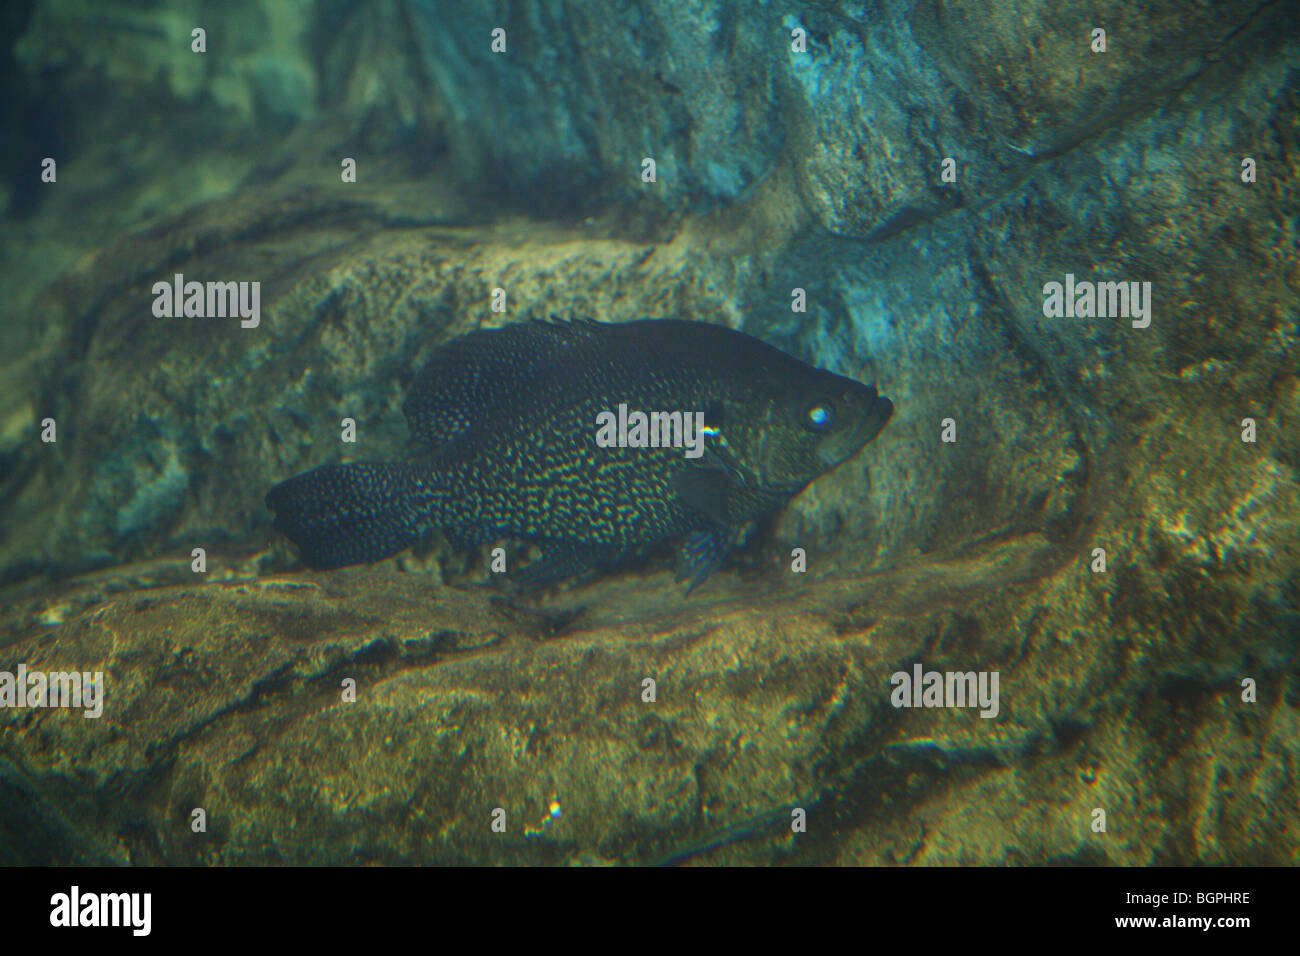 https://c8.alamy.com/comp/BGPHRE/black-crappie-swimming-suspended-near-rocky-shelf-structure-fish-habitat-BGPHRE.jpg